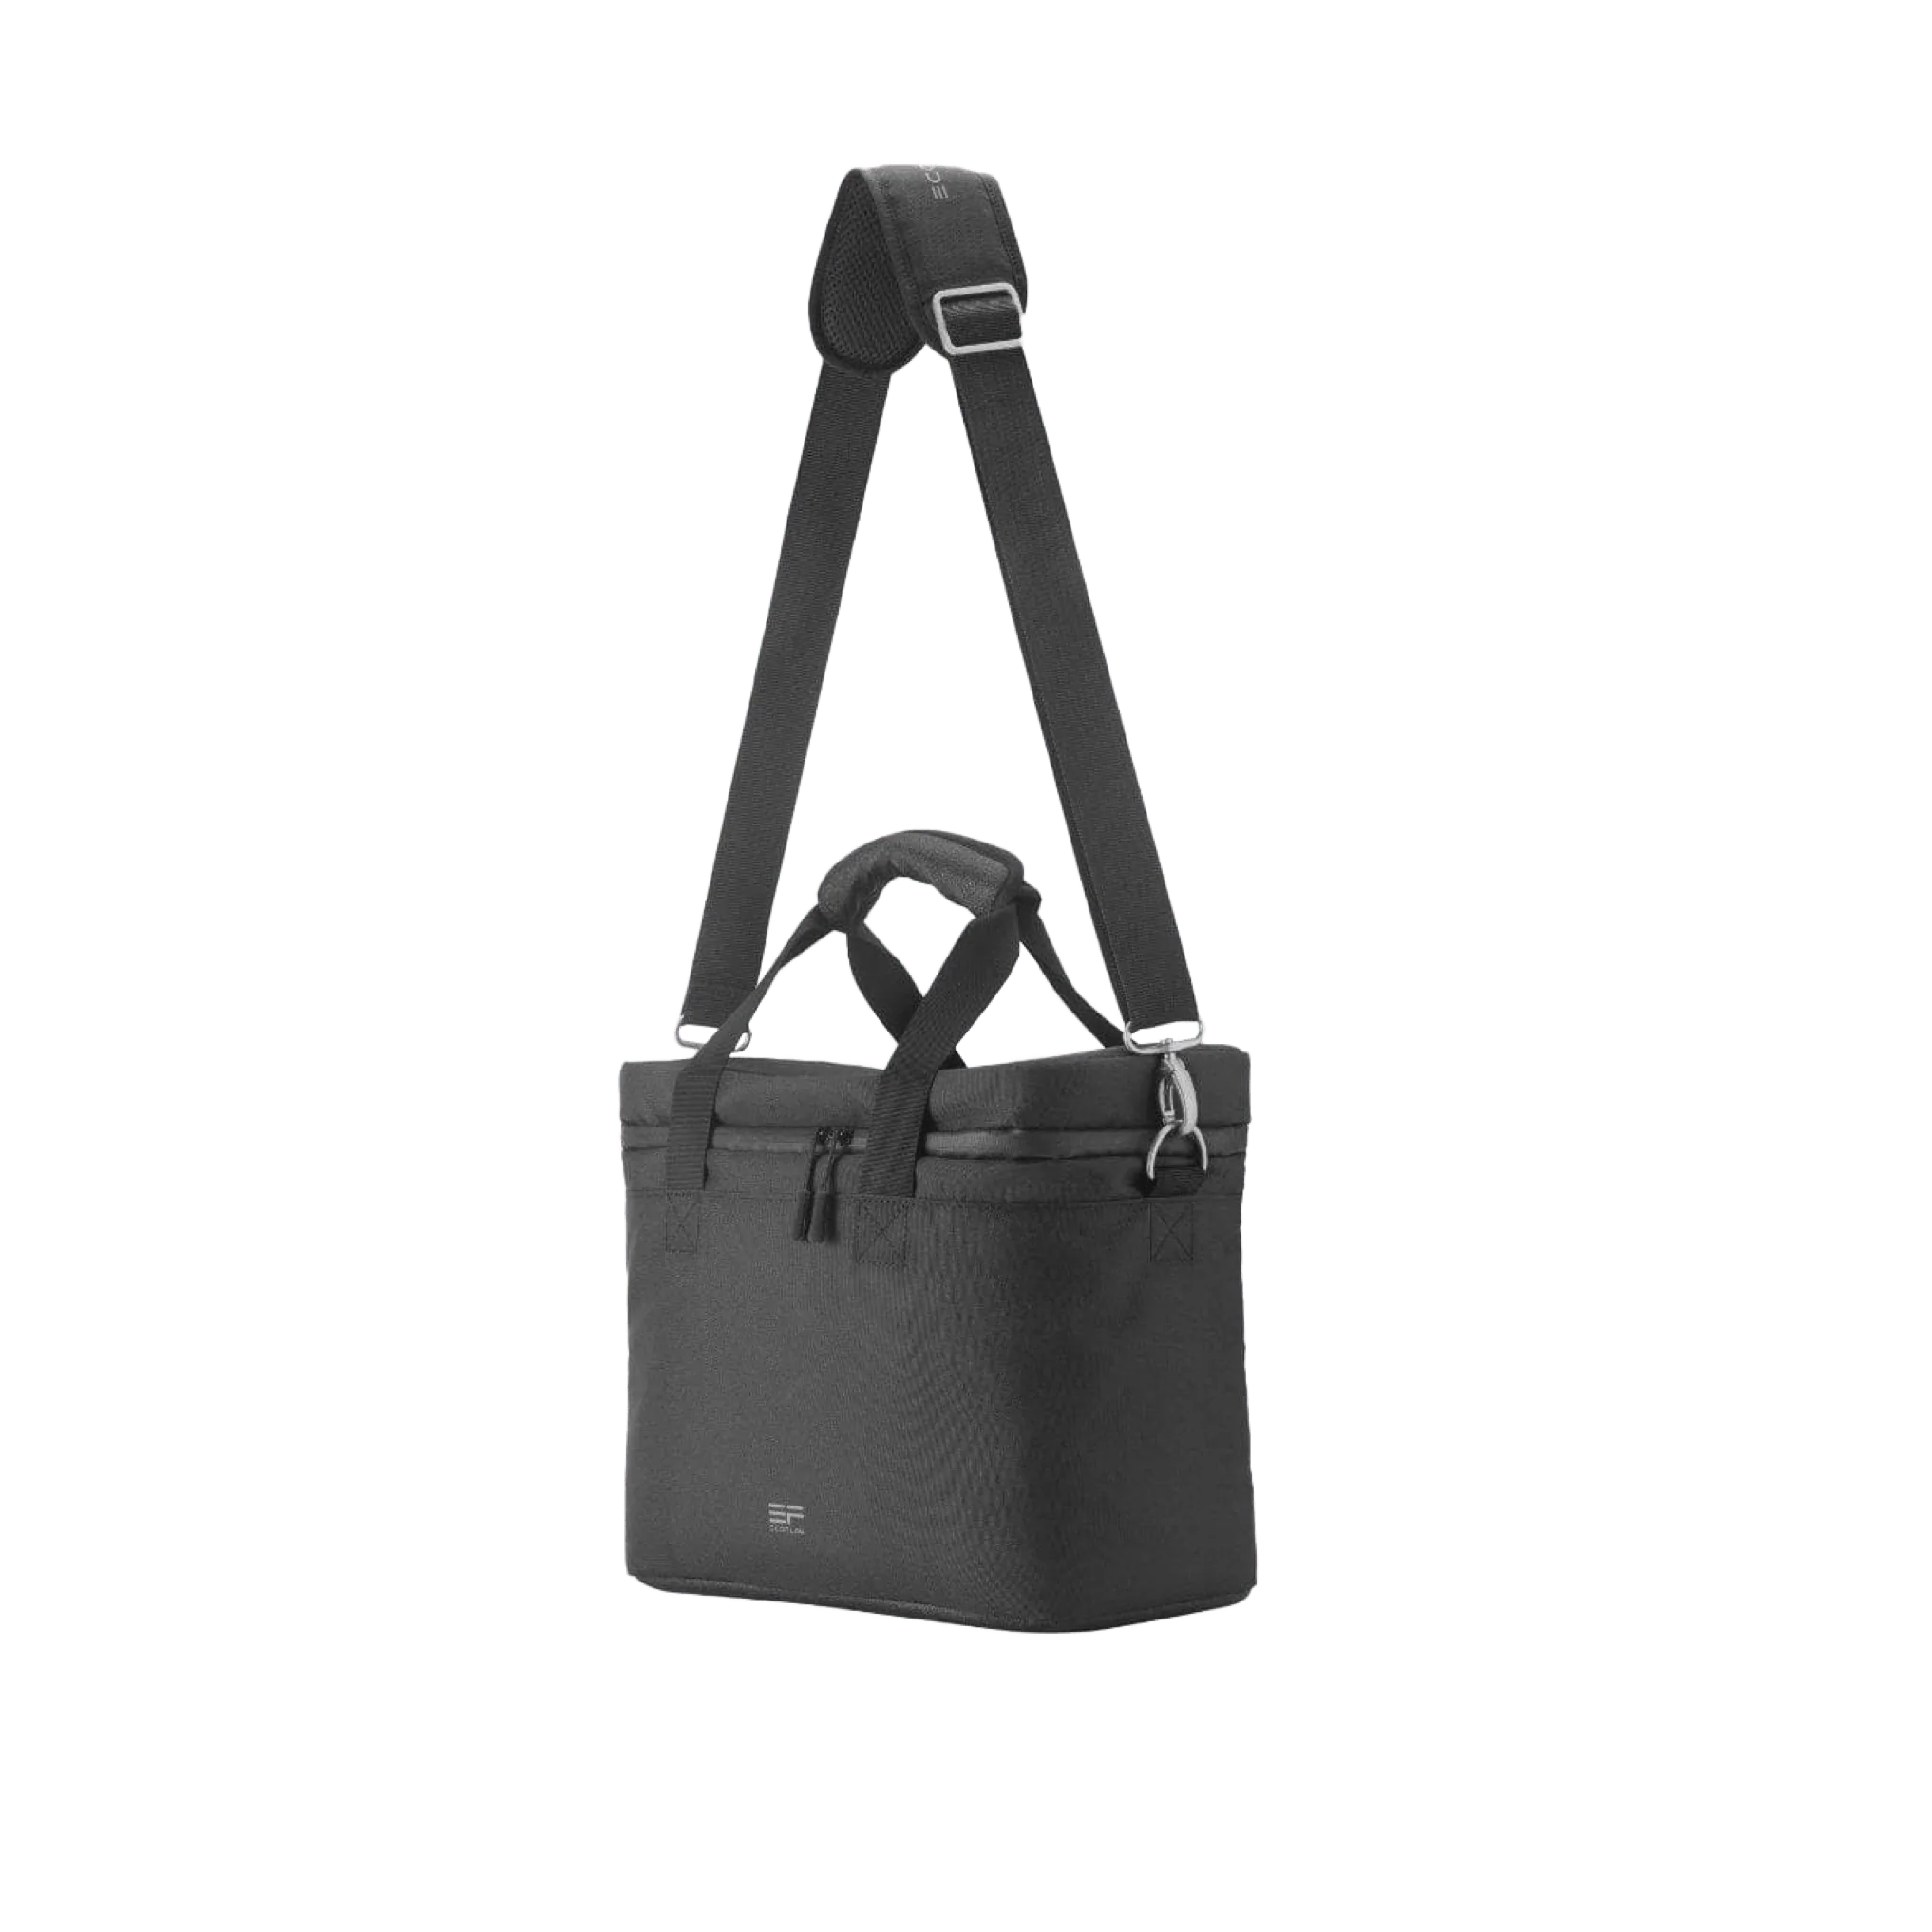 A black tote bag with a shoulder strap, EcoFlow RIVER Bag.